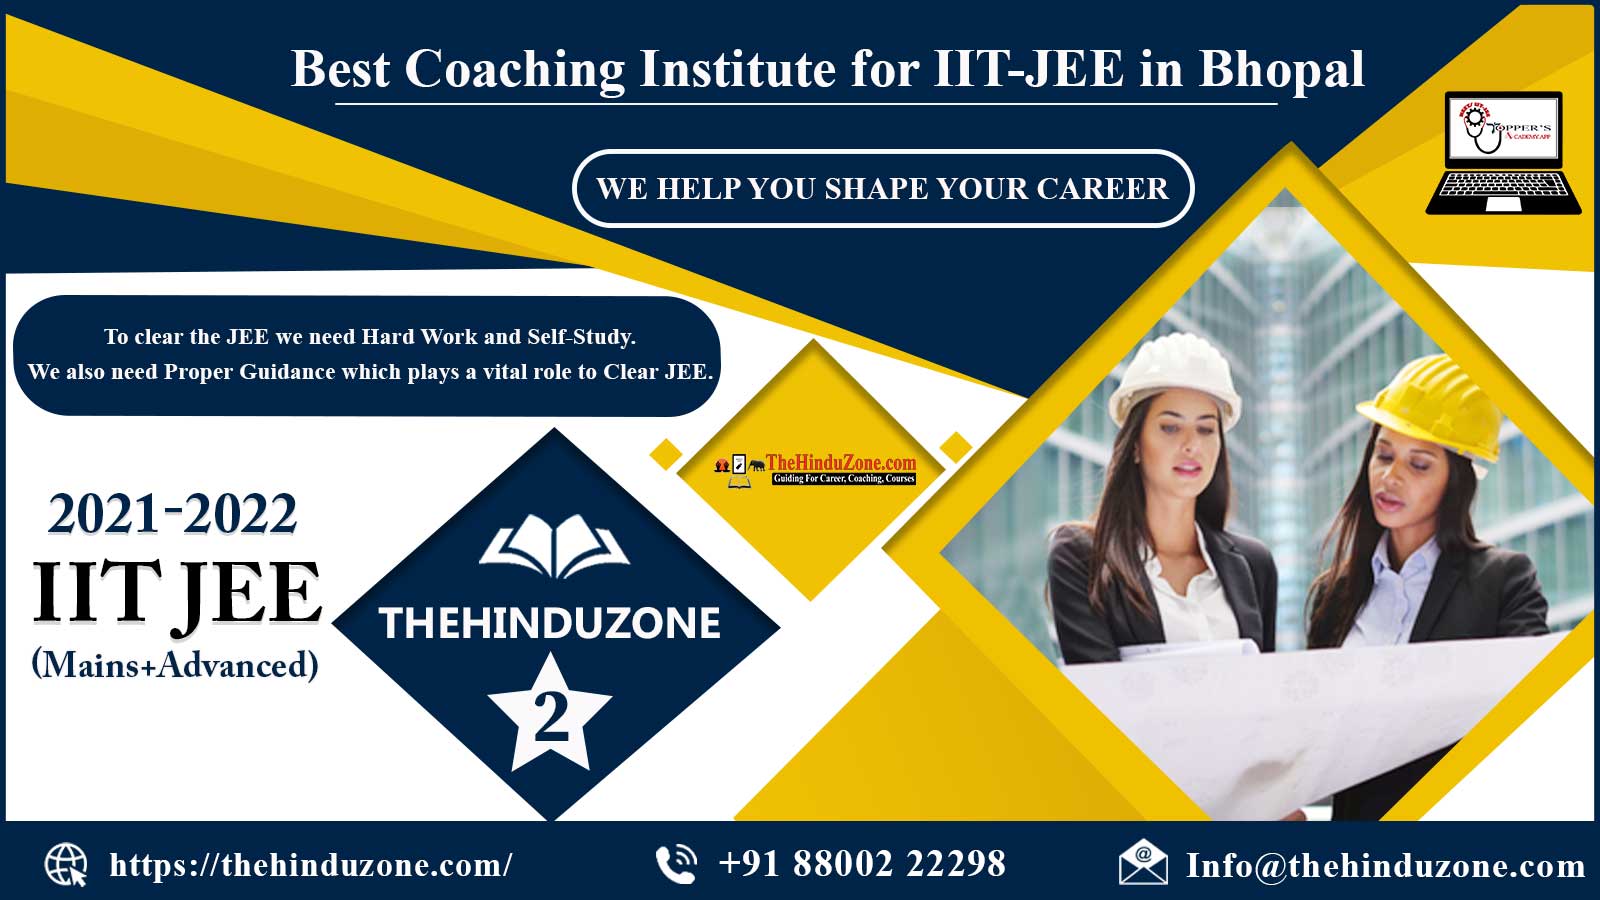 The Hinduzone IIT JEE Coaching in Bhopal